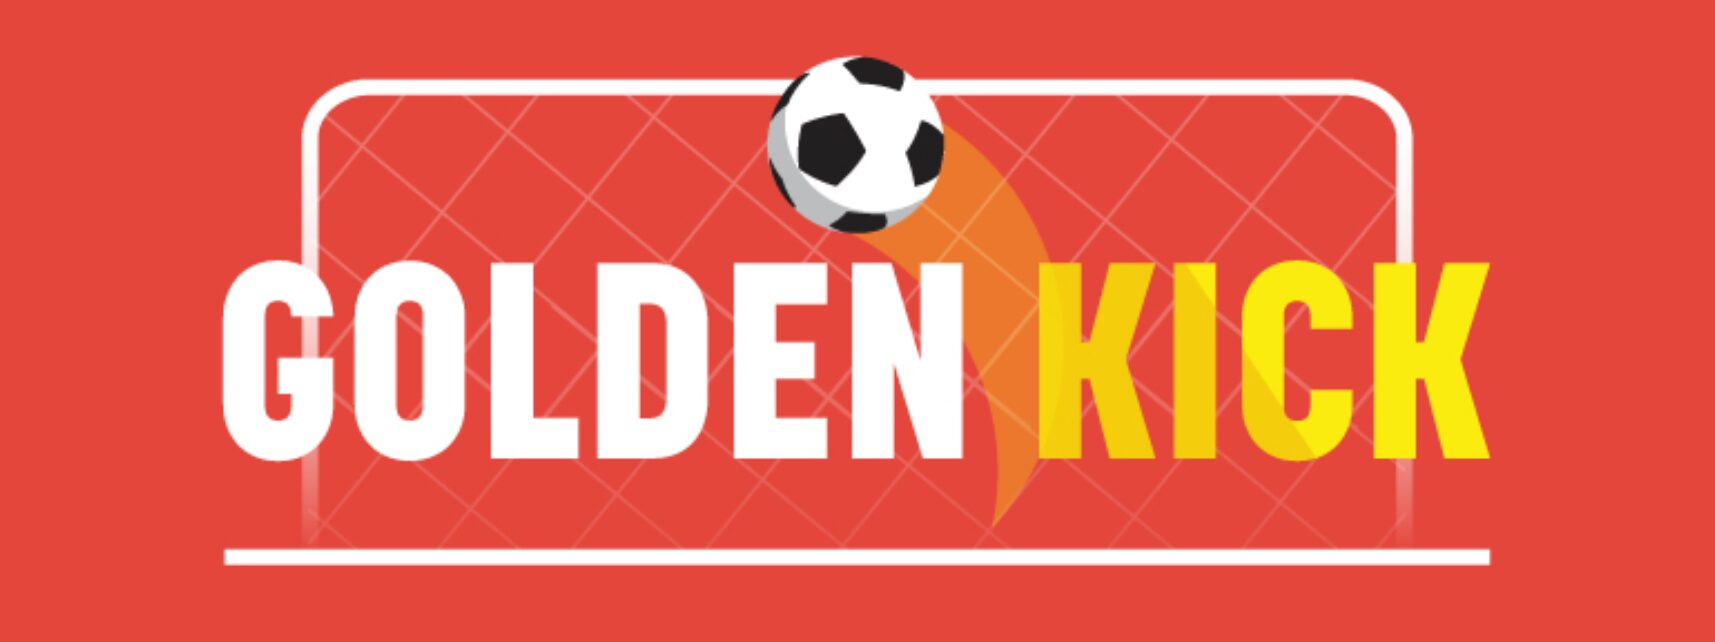 Promo Golden Kick su Snai